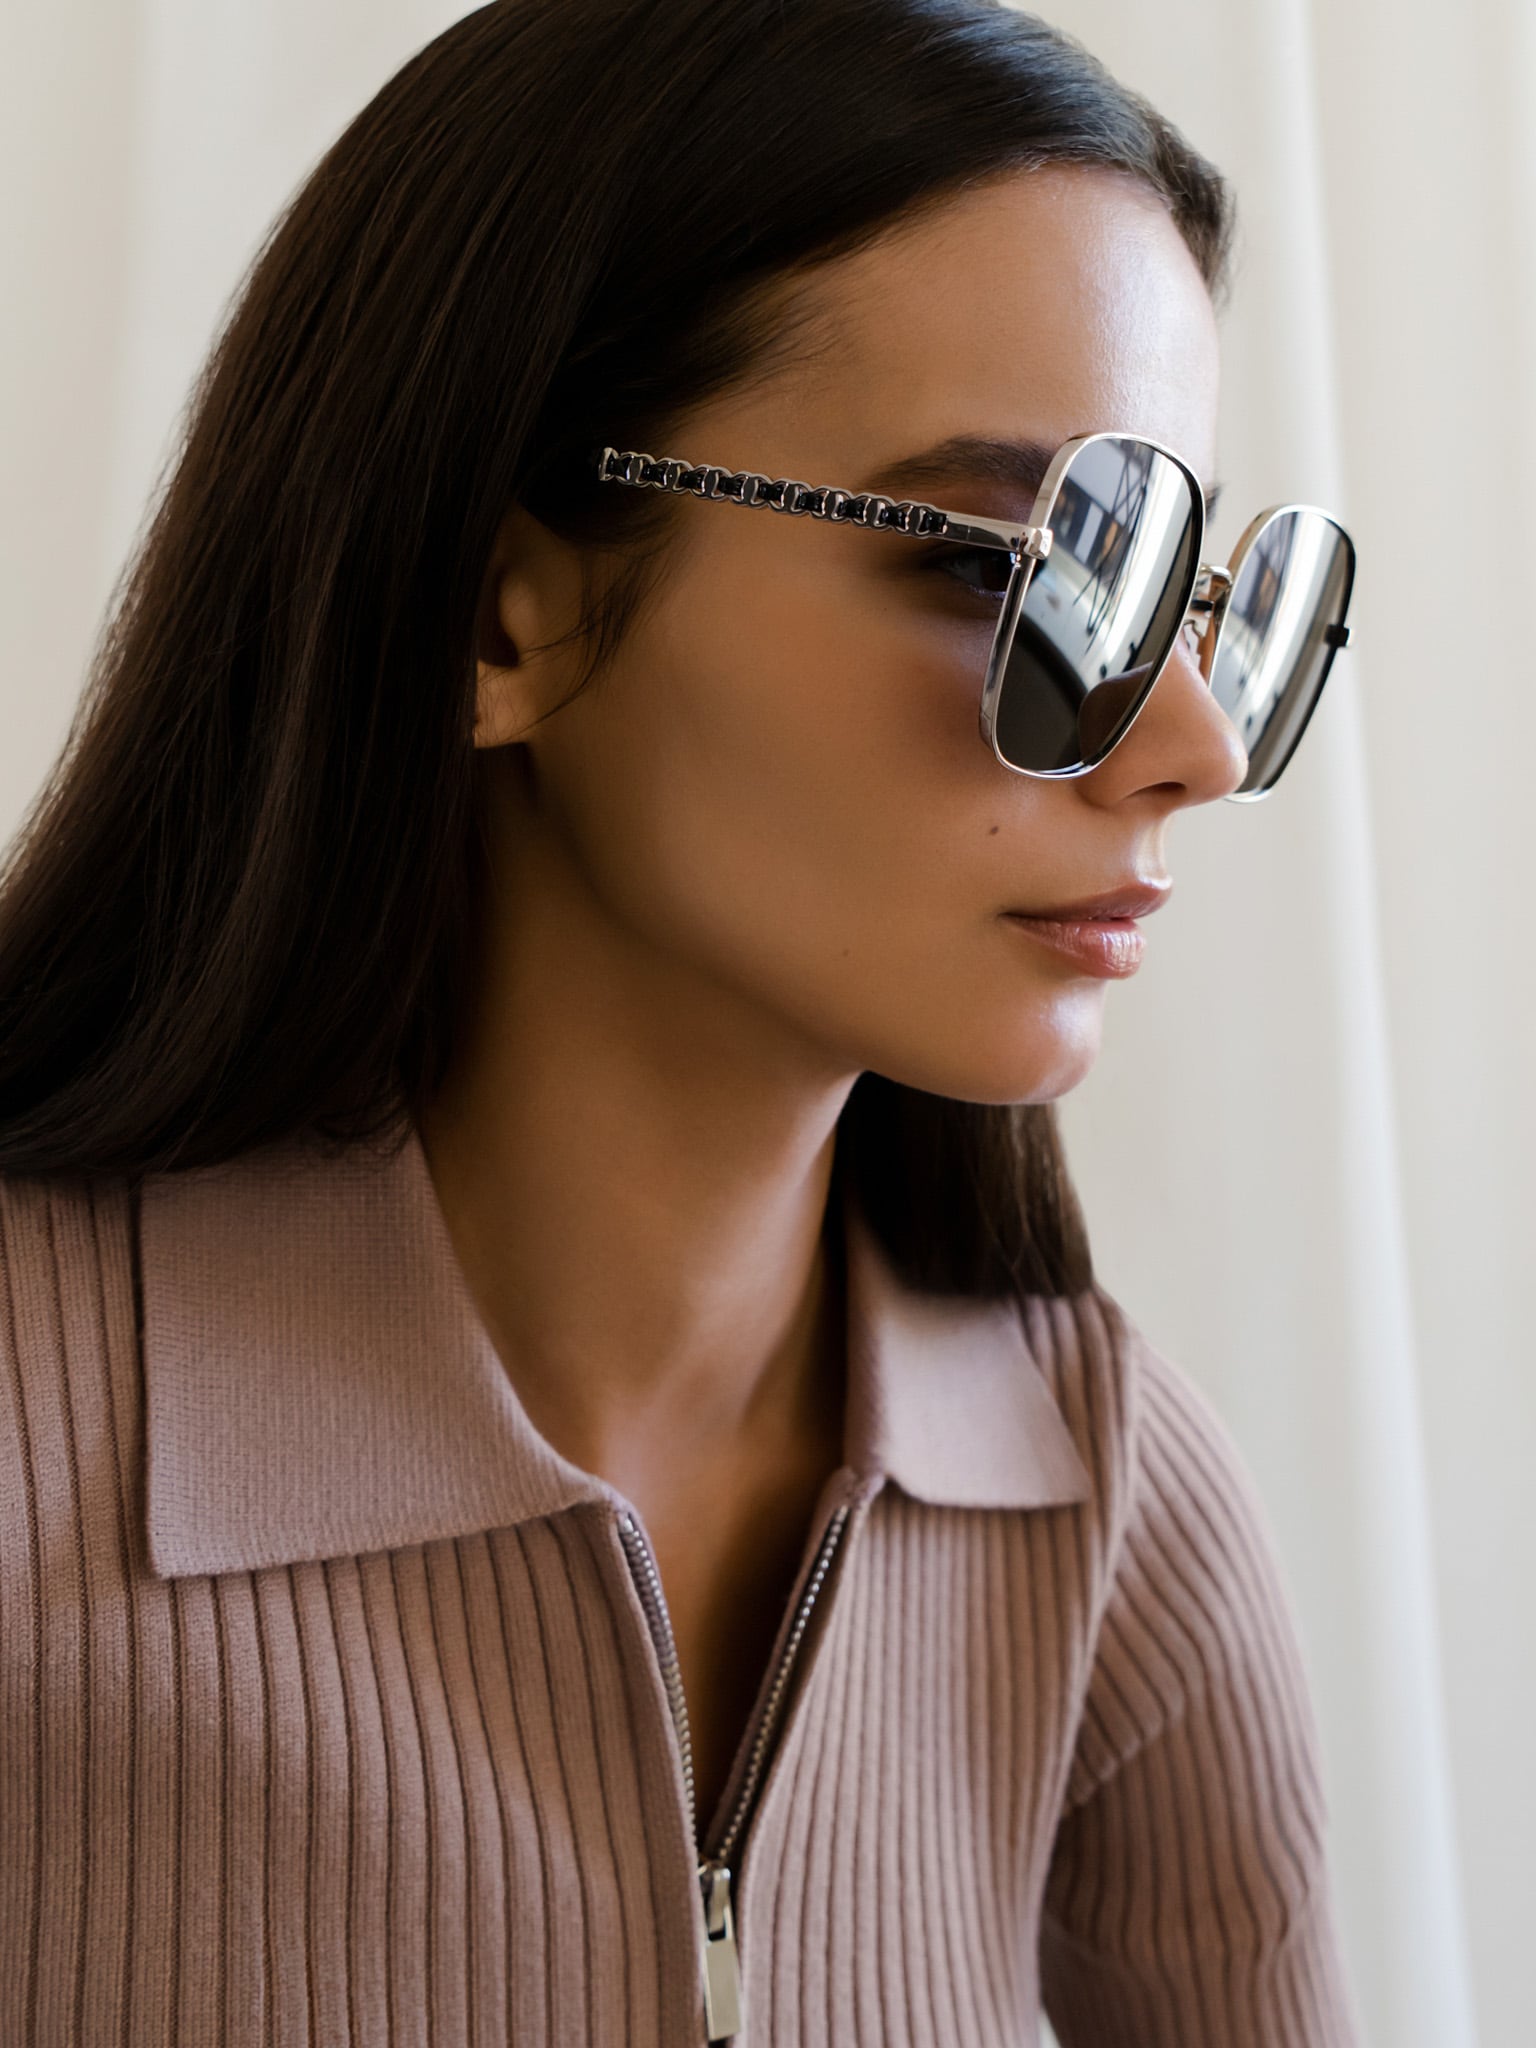 Square-shape metal-frame sunglasses